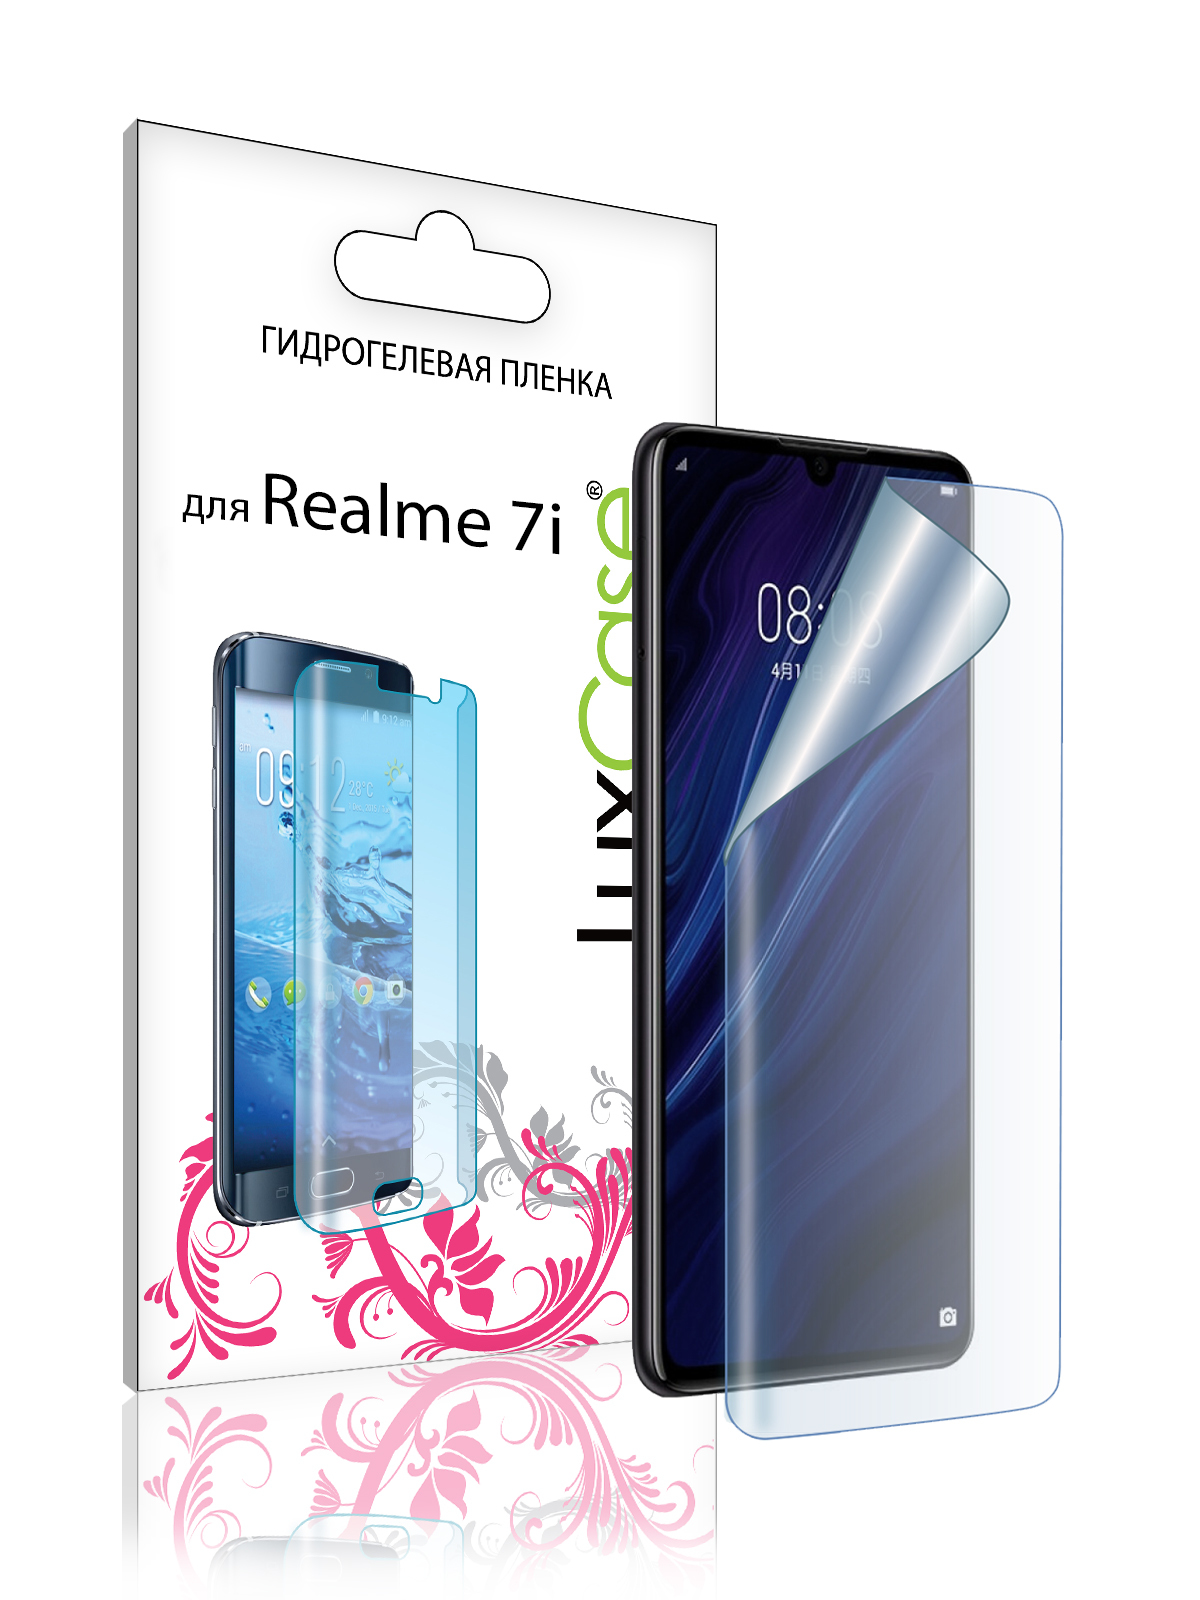 Пленка гидрогелевая LuxCase для Realme 7i 0.14mm Front Transparent 86591 пленка гидрогелевая luxcase для realme 7i 0 14mm front transparent 86591